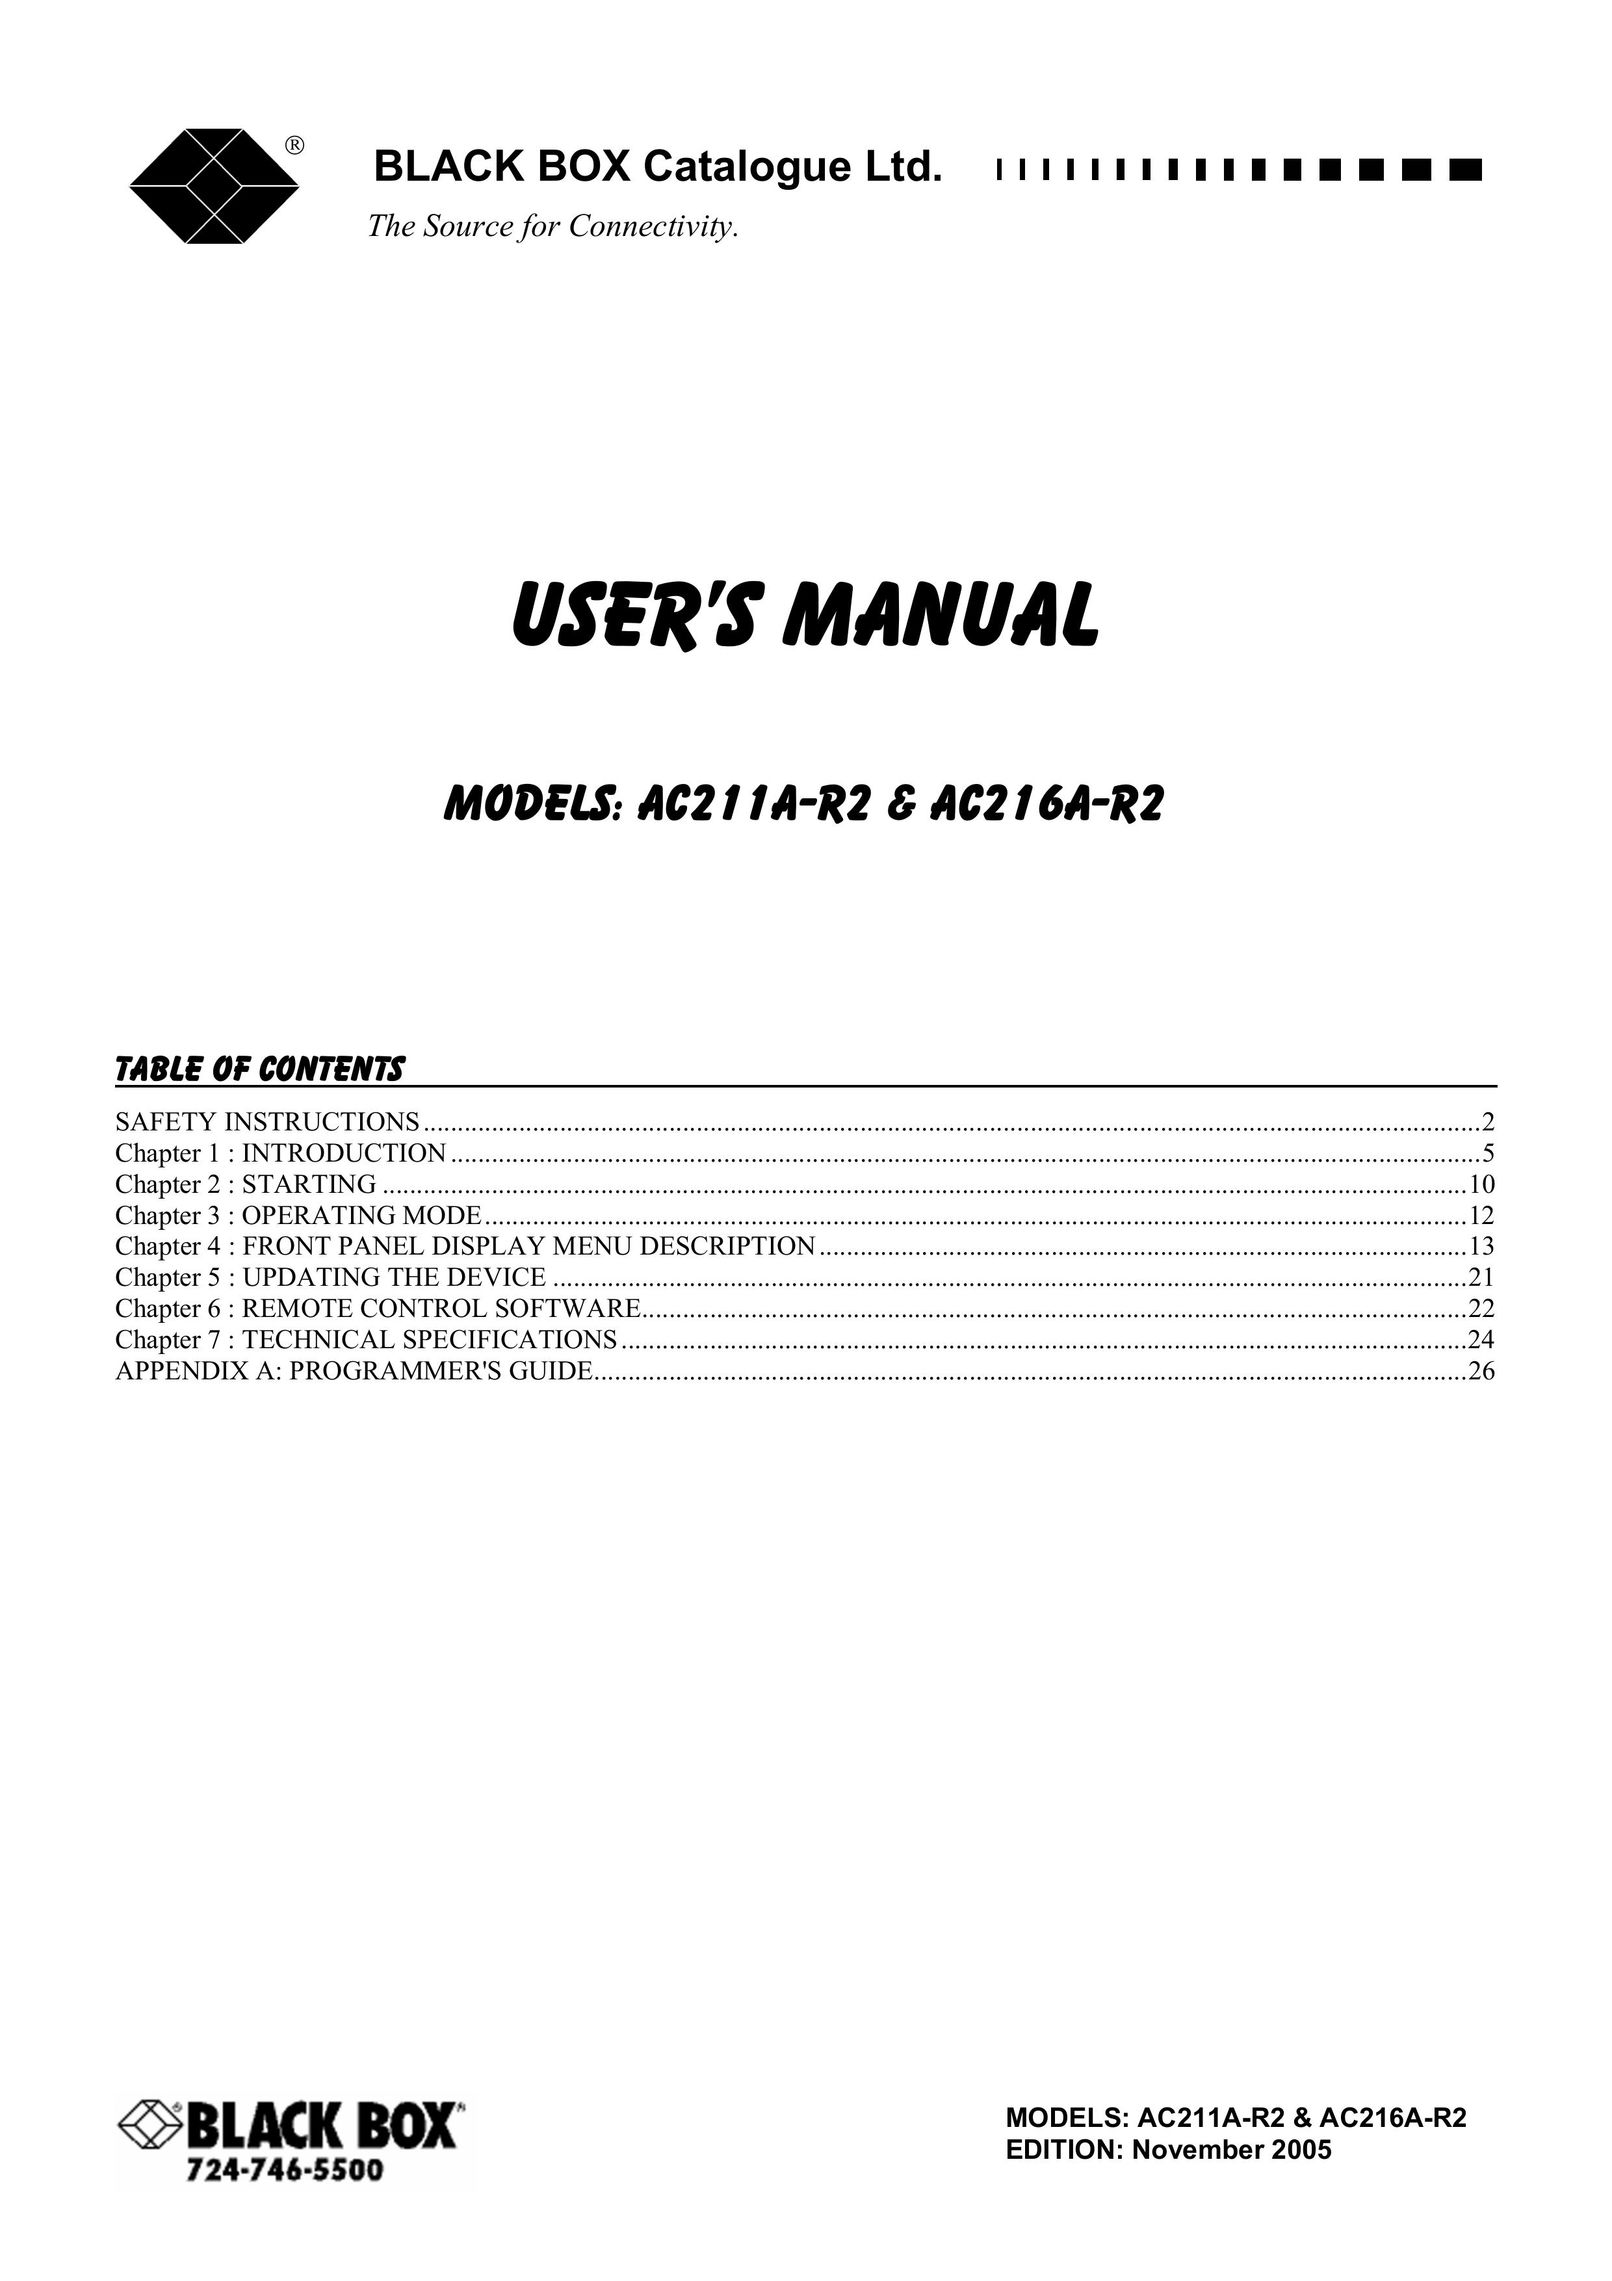 Black Box AC216A-R2 Cable Box User Manual (Page 1)